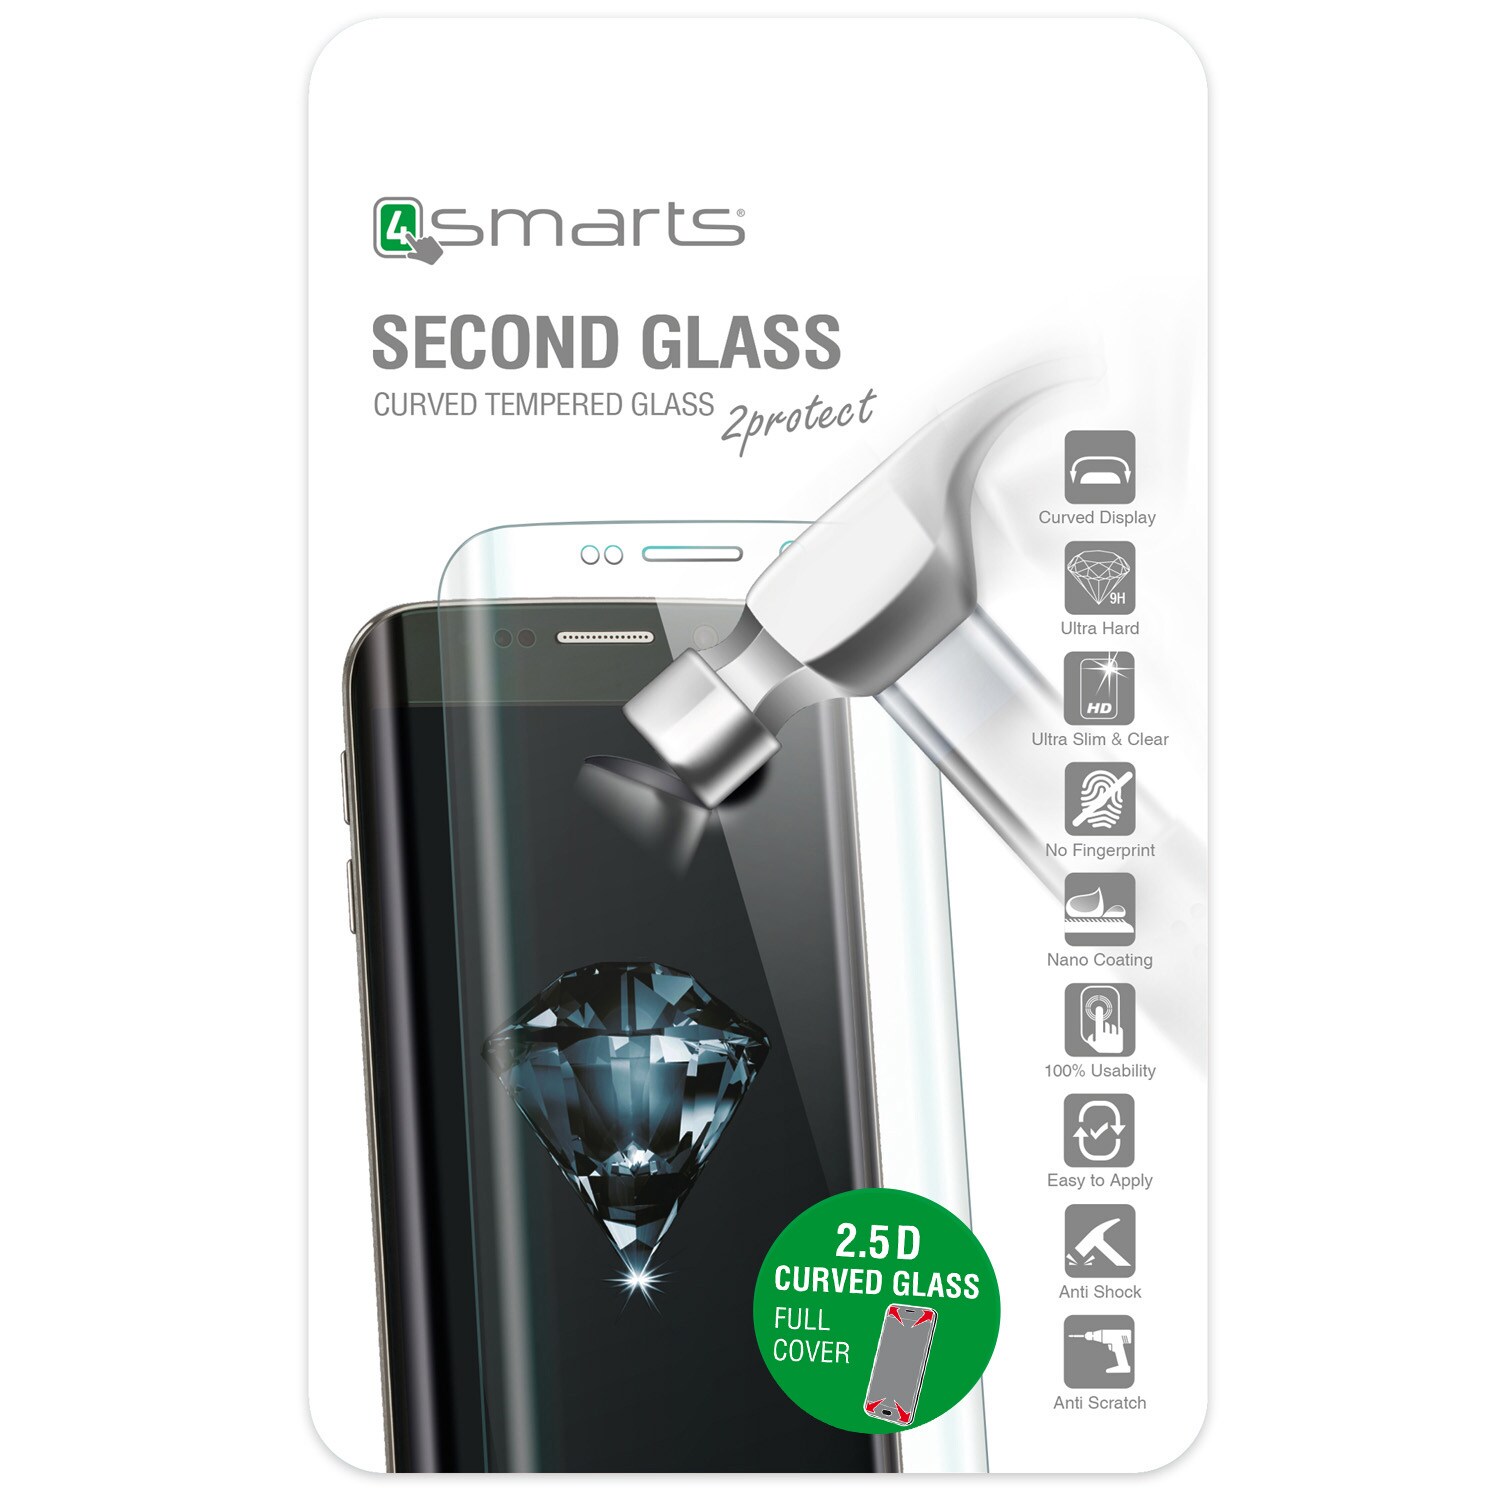 4smarts Second Glass Curved 2.5D til iPhone 8 / 7 - Rose Guld